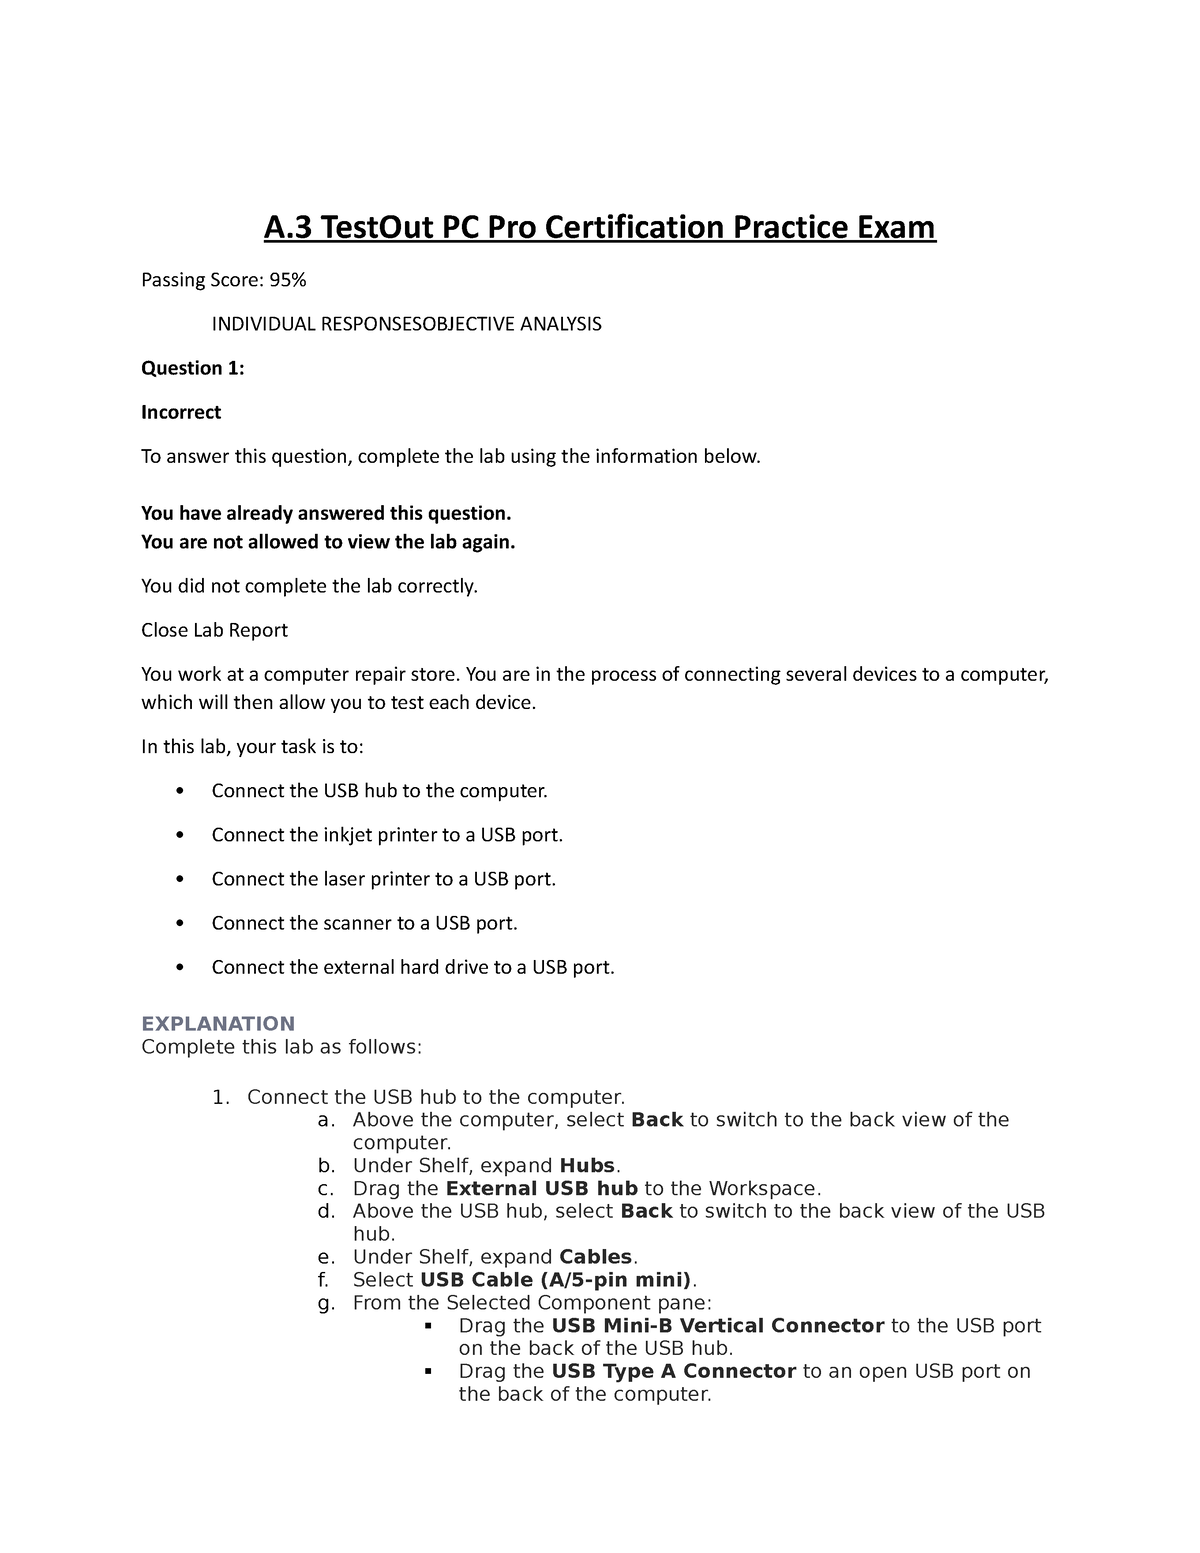 A 3 Test Out PC Pro Certification Practice Exam A TestOut PC Pro